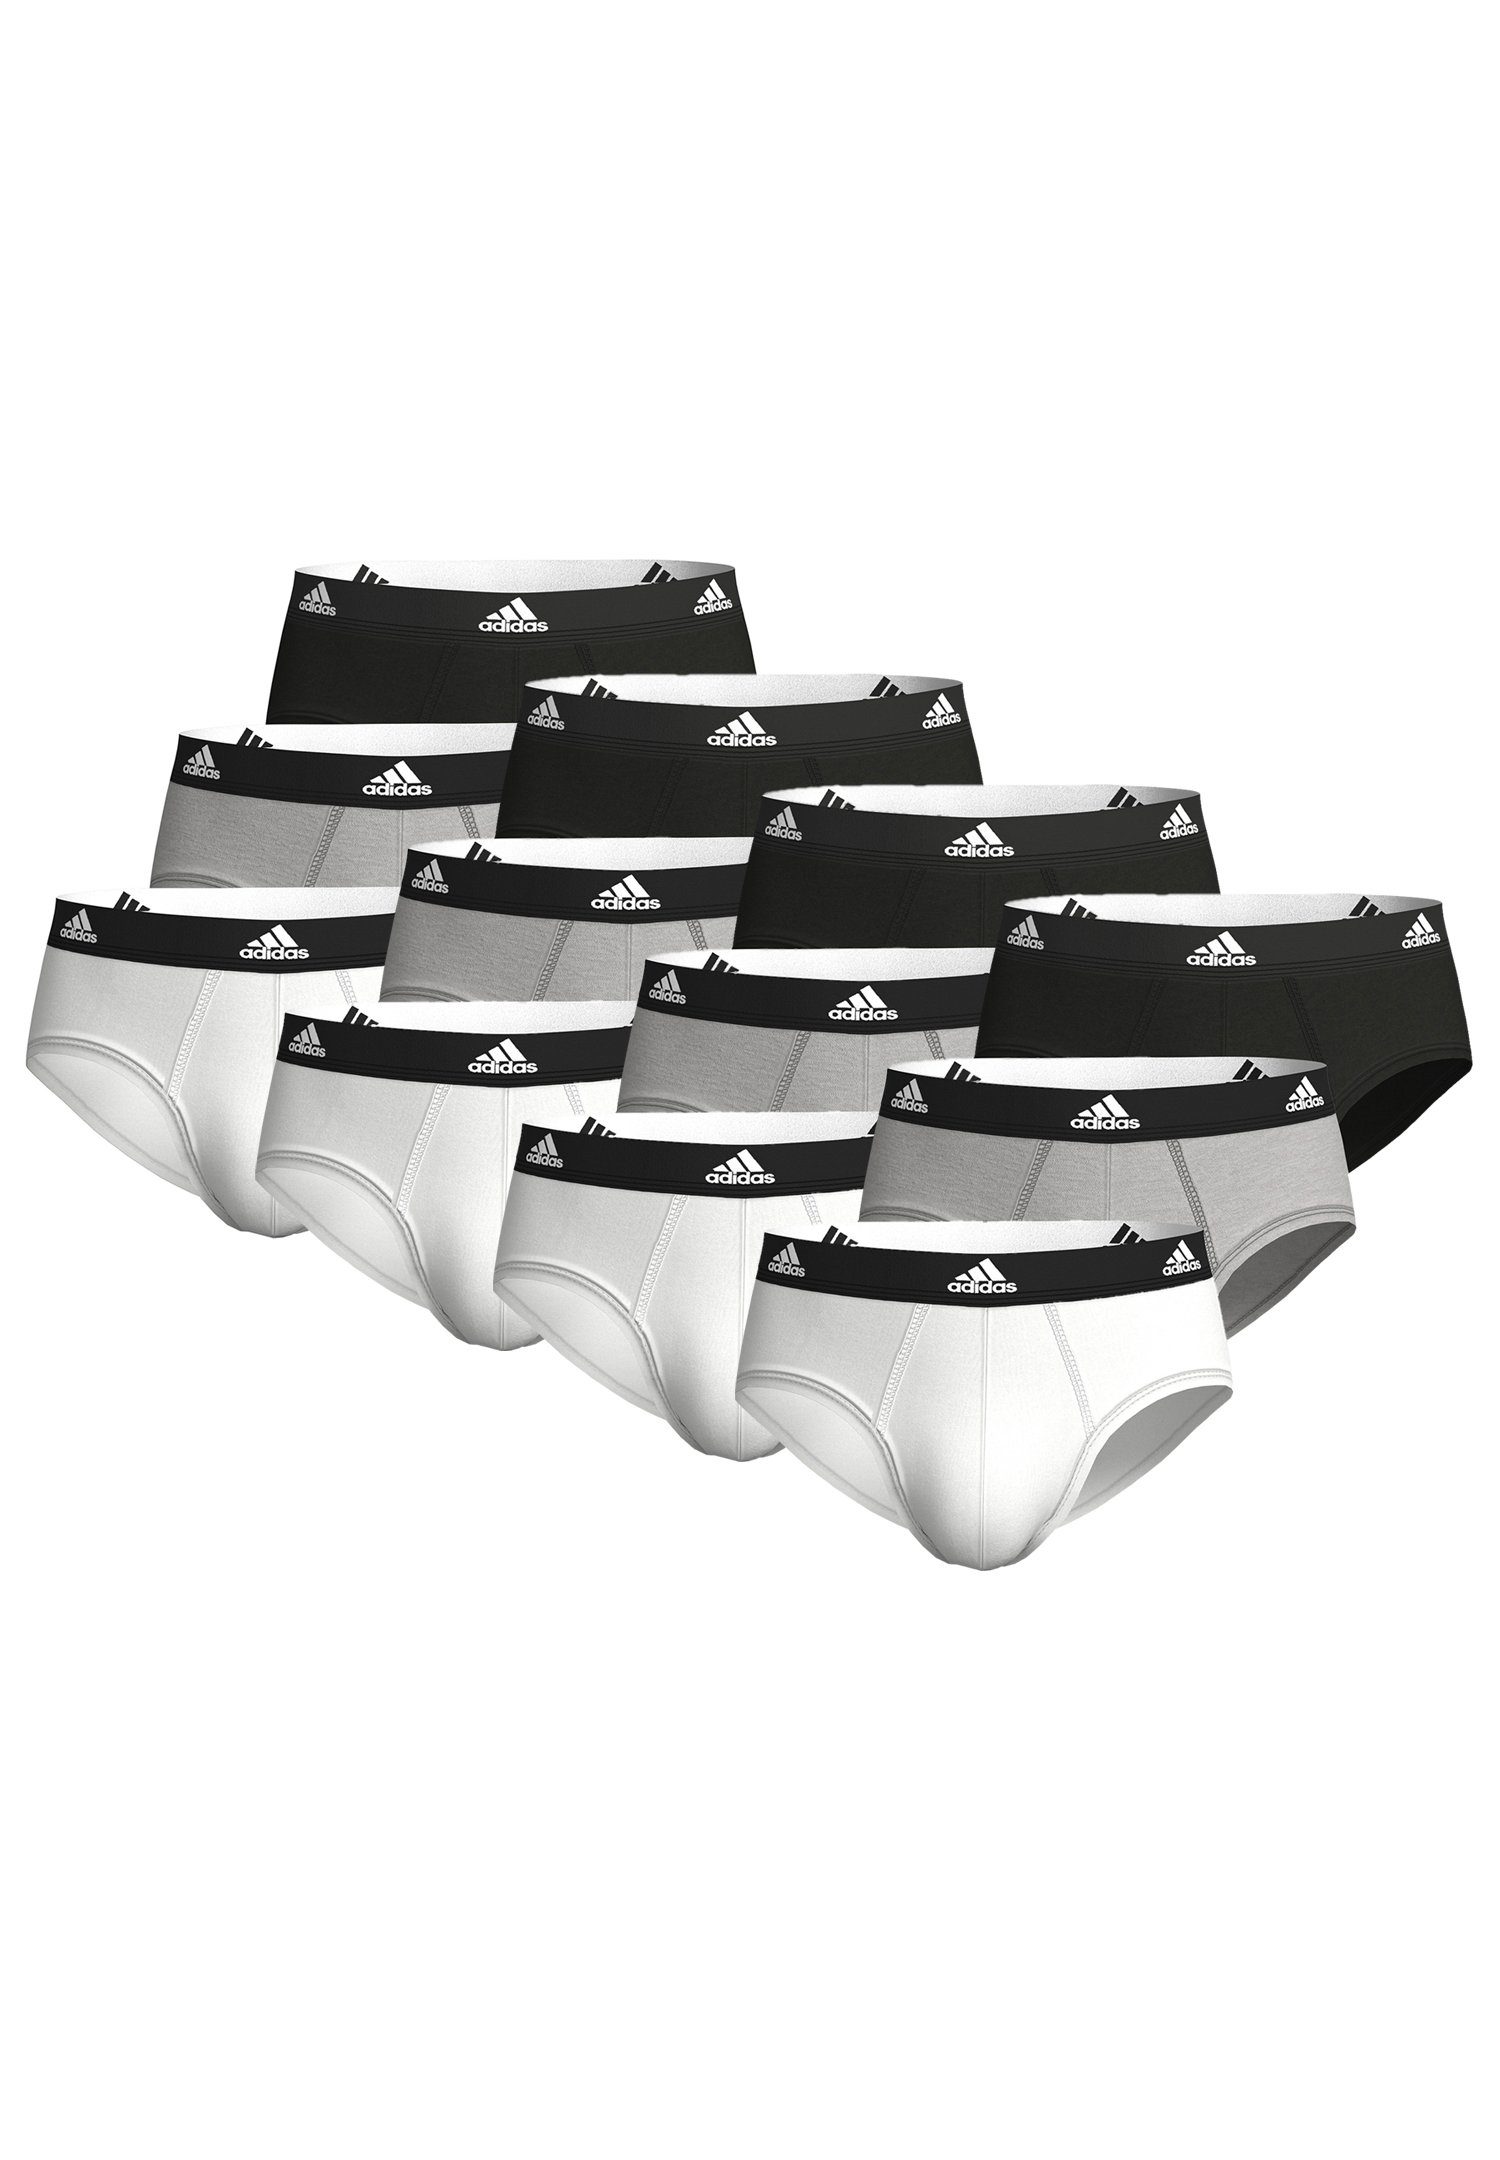 adidas Performance Boxershorts BRIEF (Packung, 12er-Pack) White Grey / 12-St., / Black (12PK)